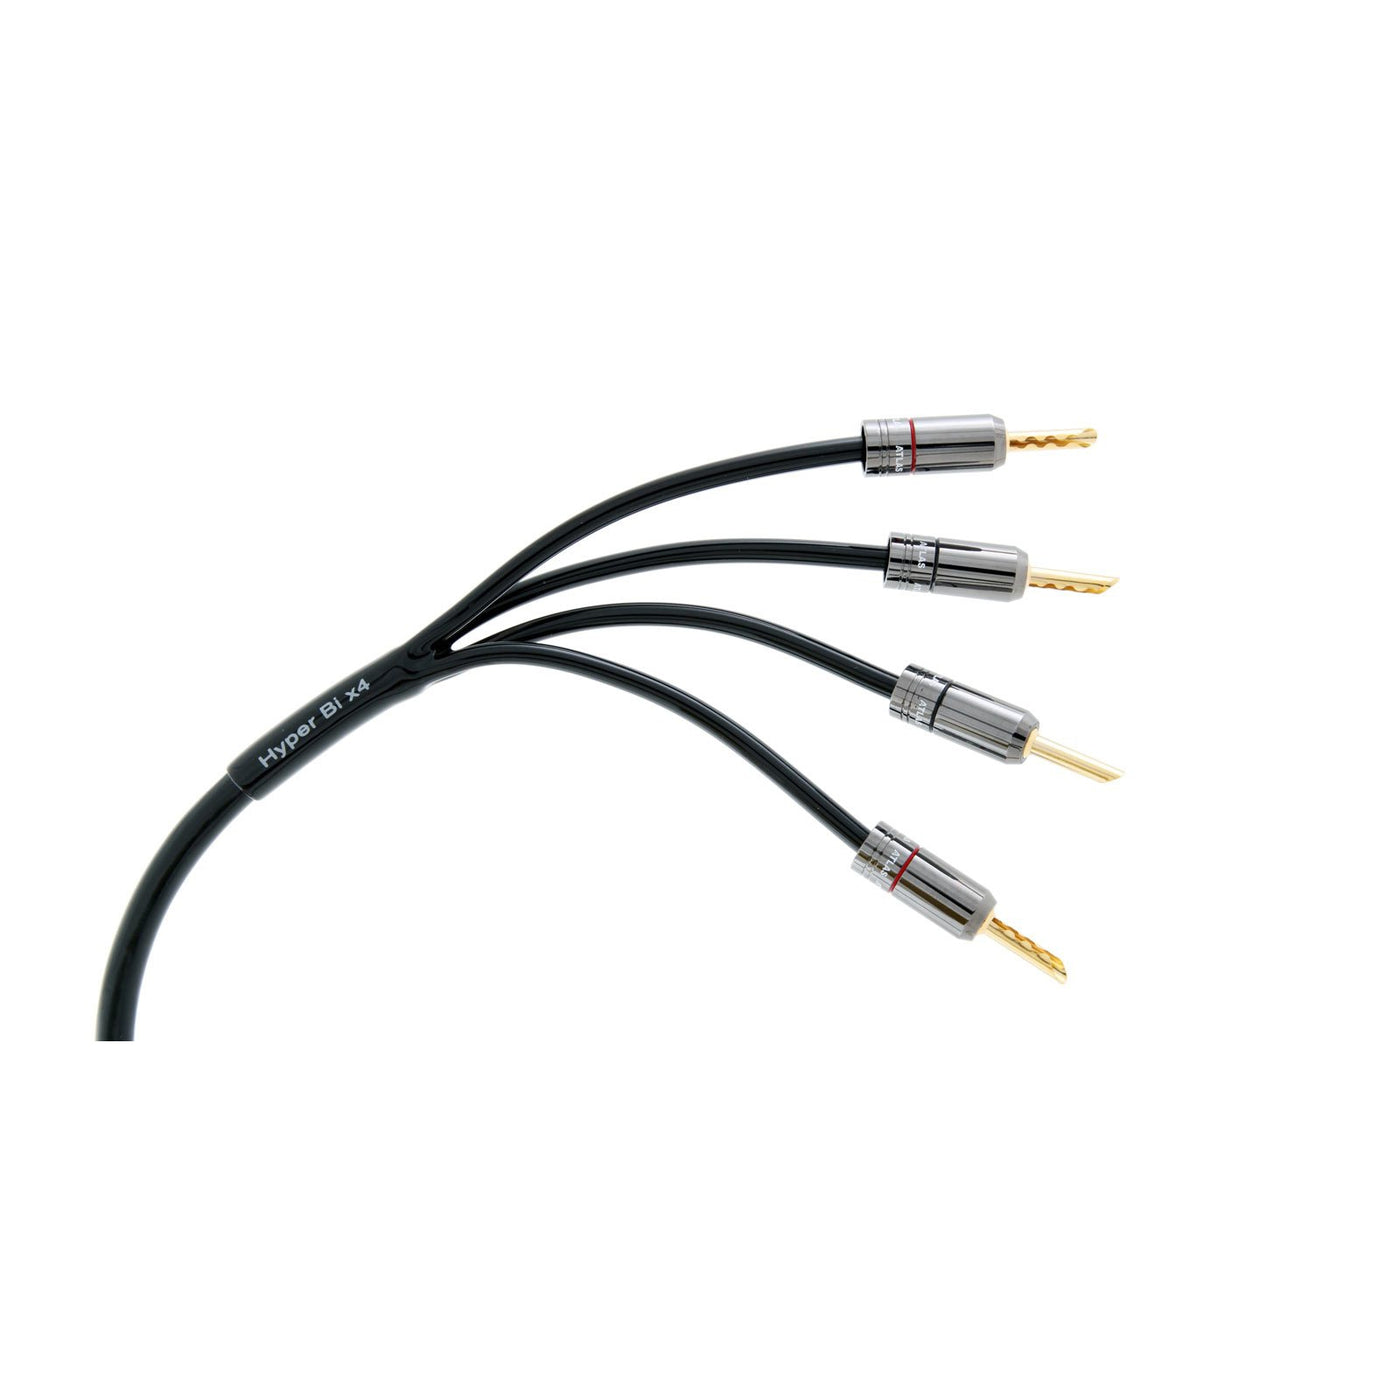 Atlas Hyper Bi-Wire Speaker Cable (per meter) at Audio Influence